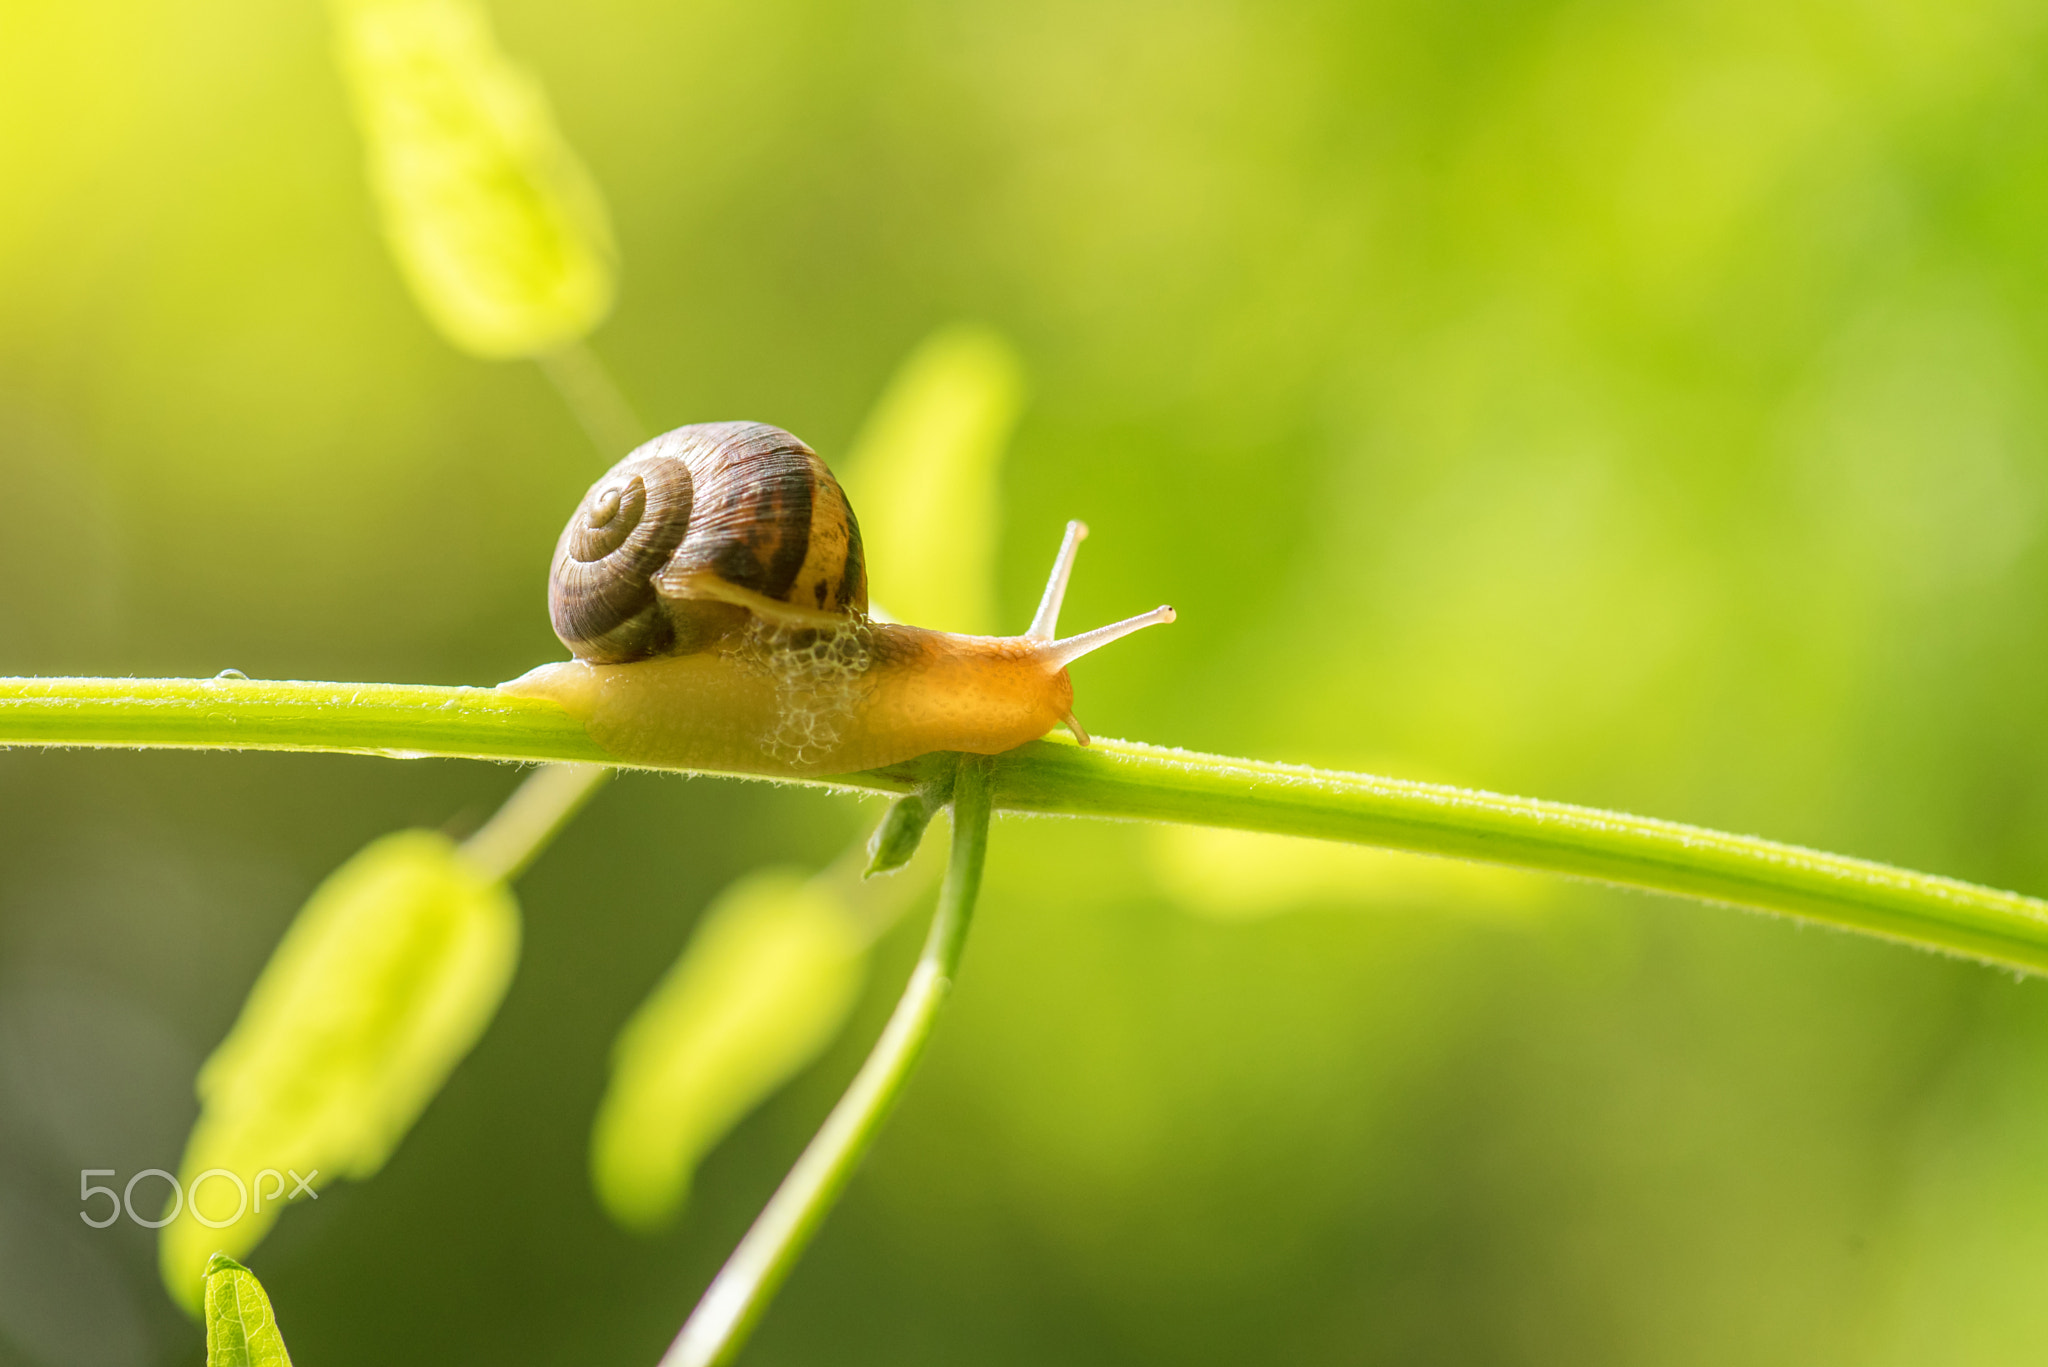 Snail on green stem.